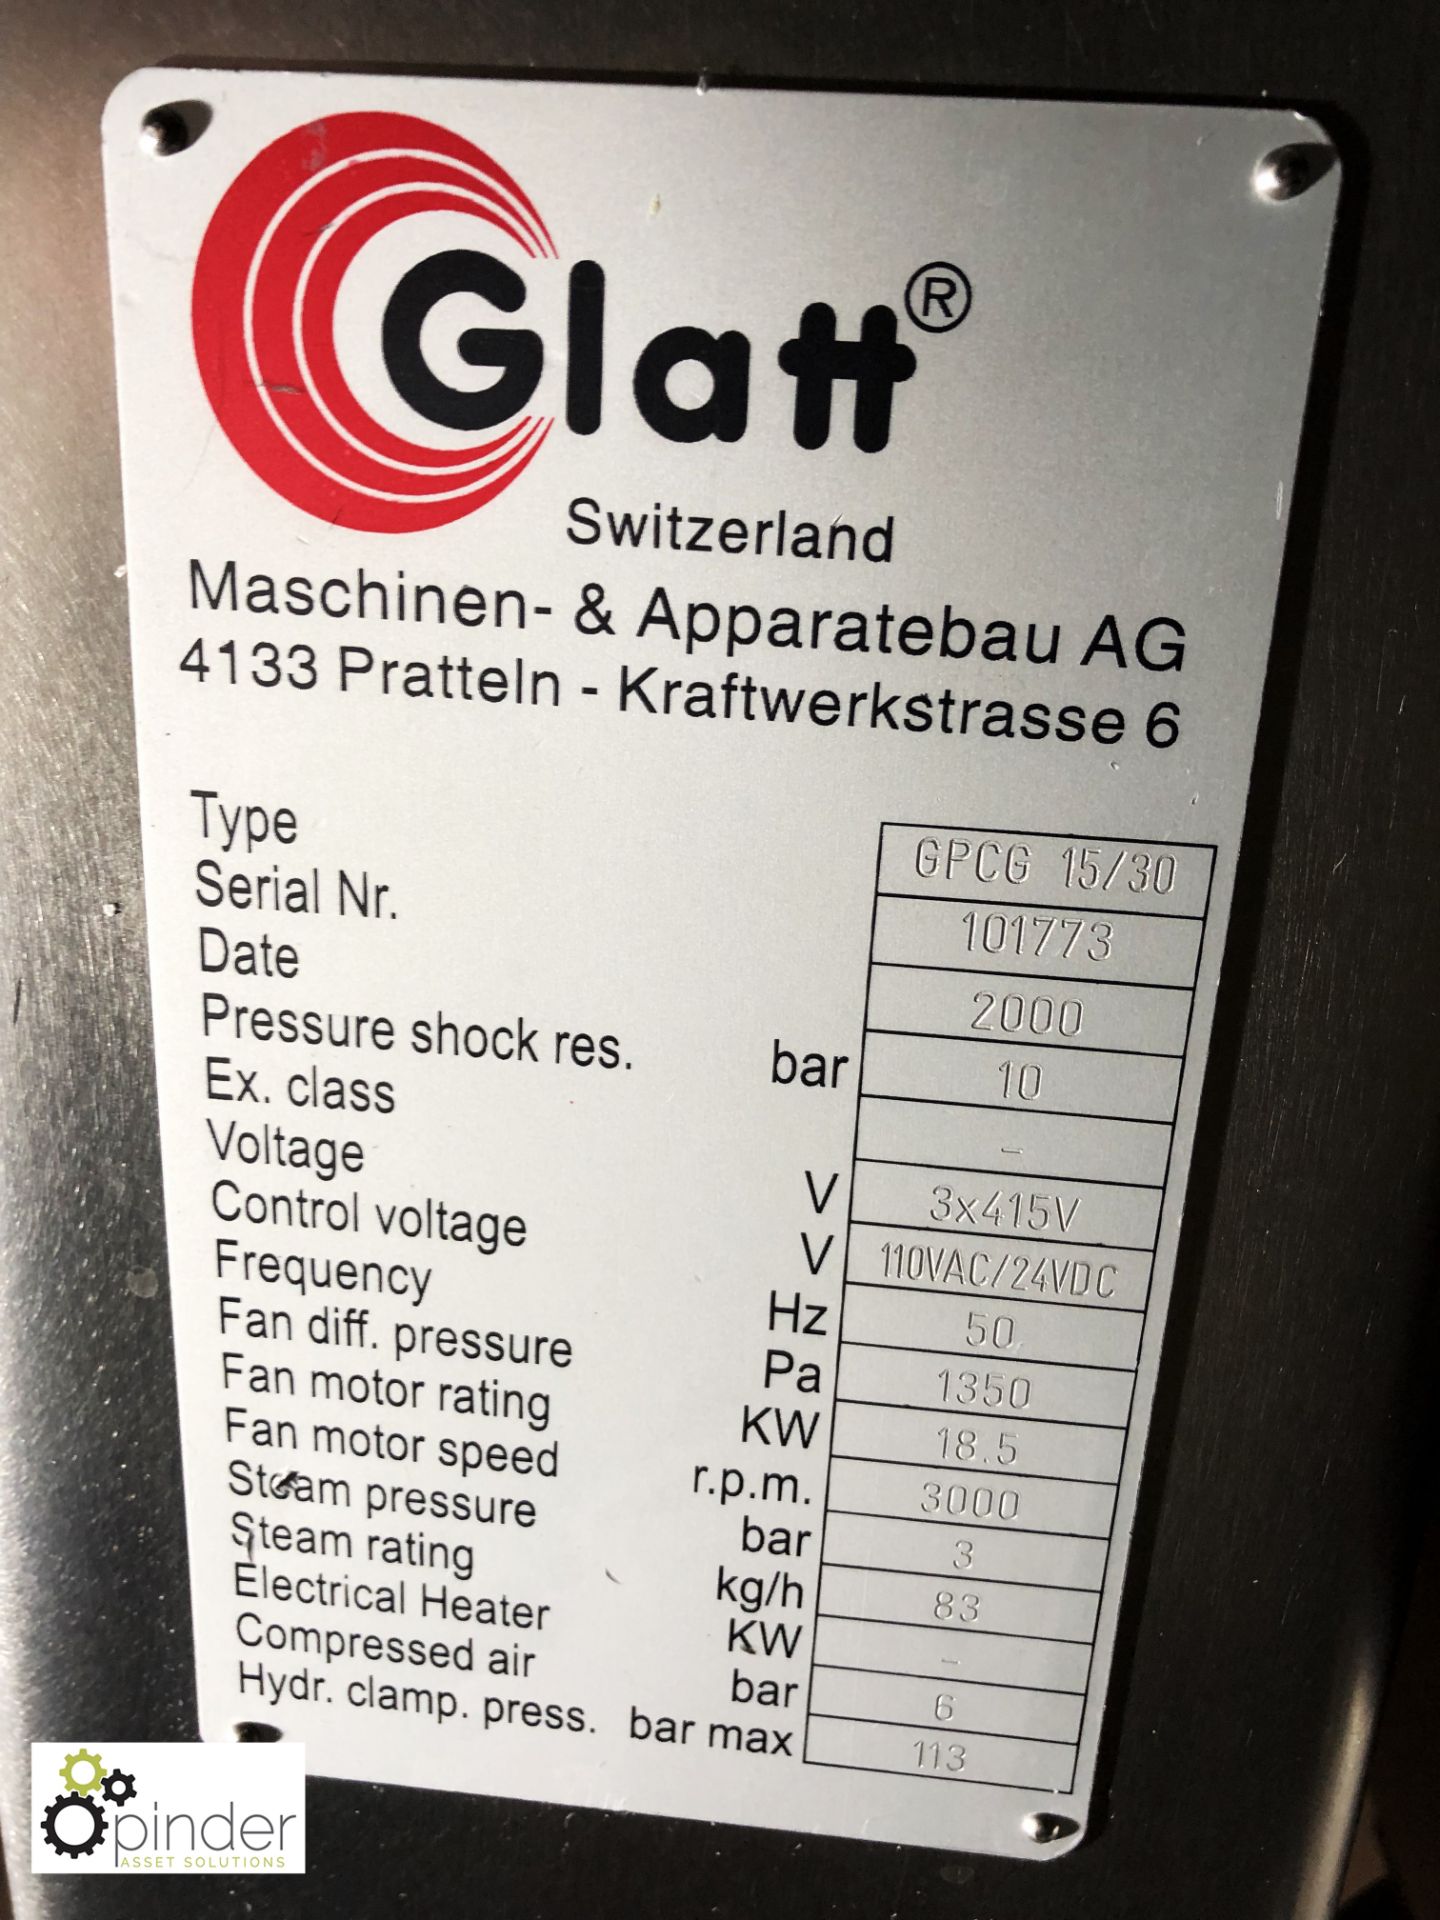 Glatt 15/30 Fluid Bed Dryer Granulator, year 2000, serial number 101773, voltage 3 x 415volts, - Image 8 of 19